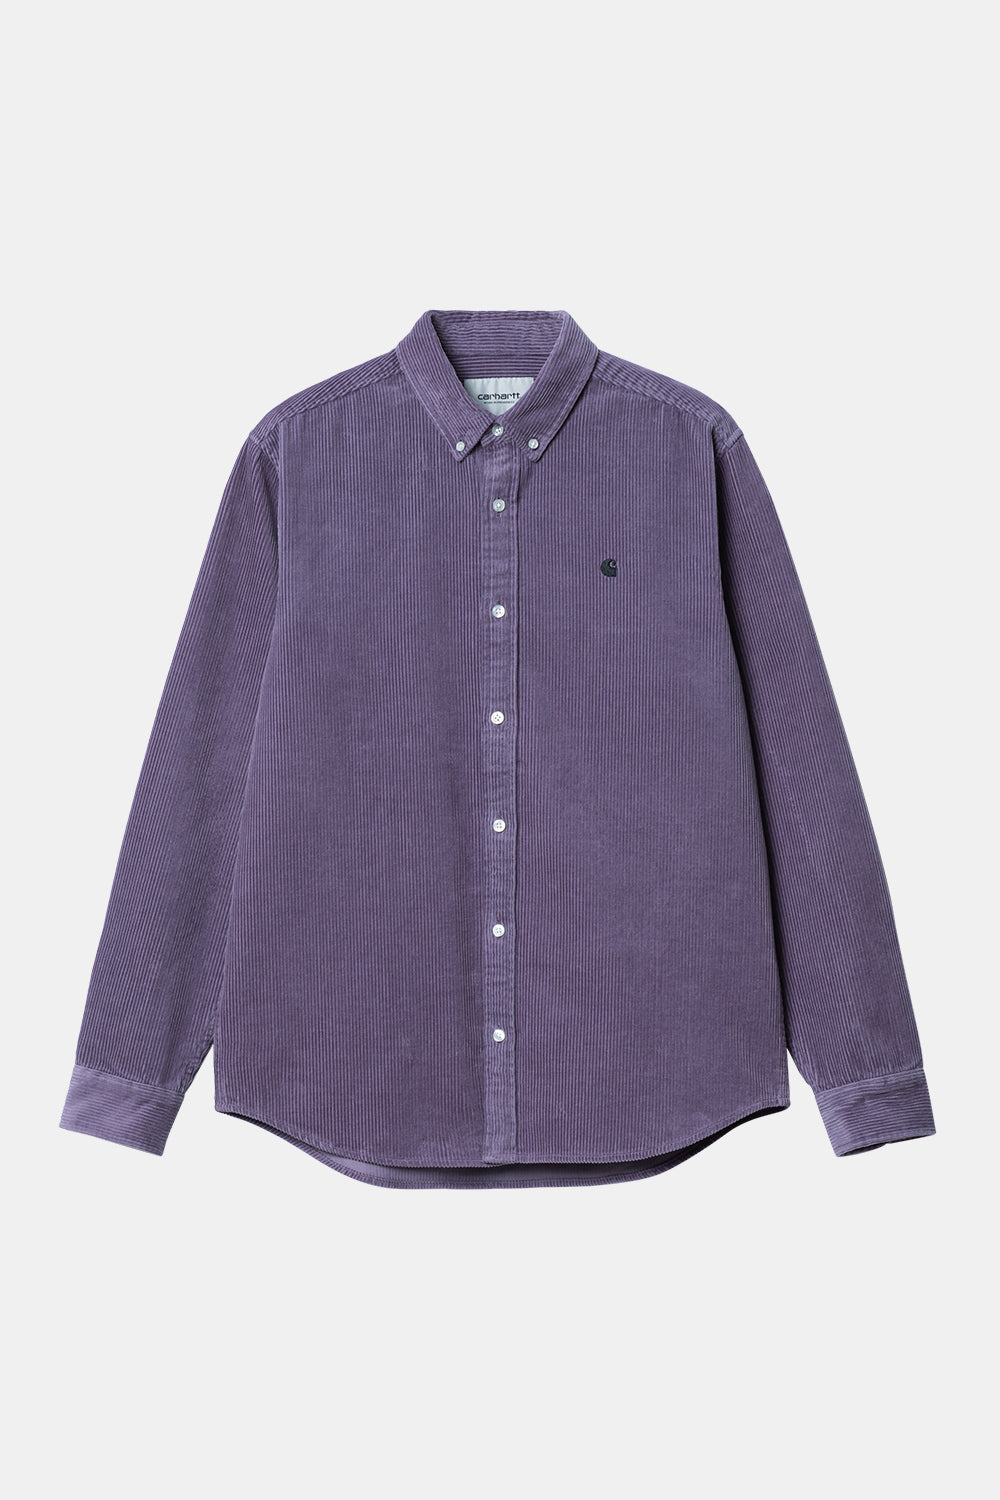 Carhartt WIP Madison Cord Long Sleeve Shirt (Glassy Purple/Black)